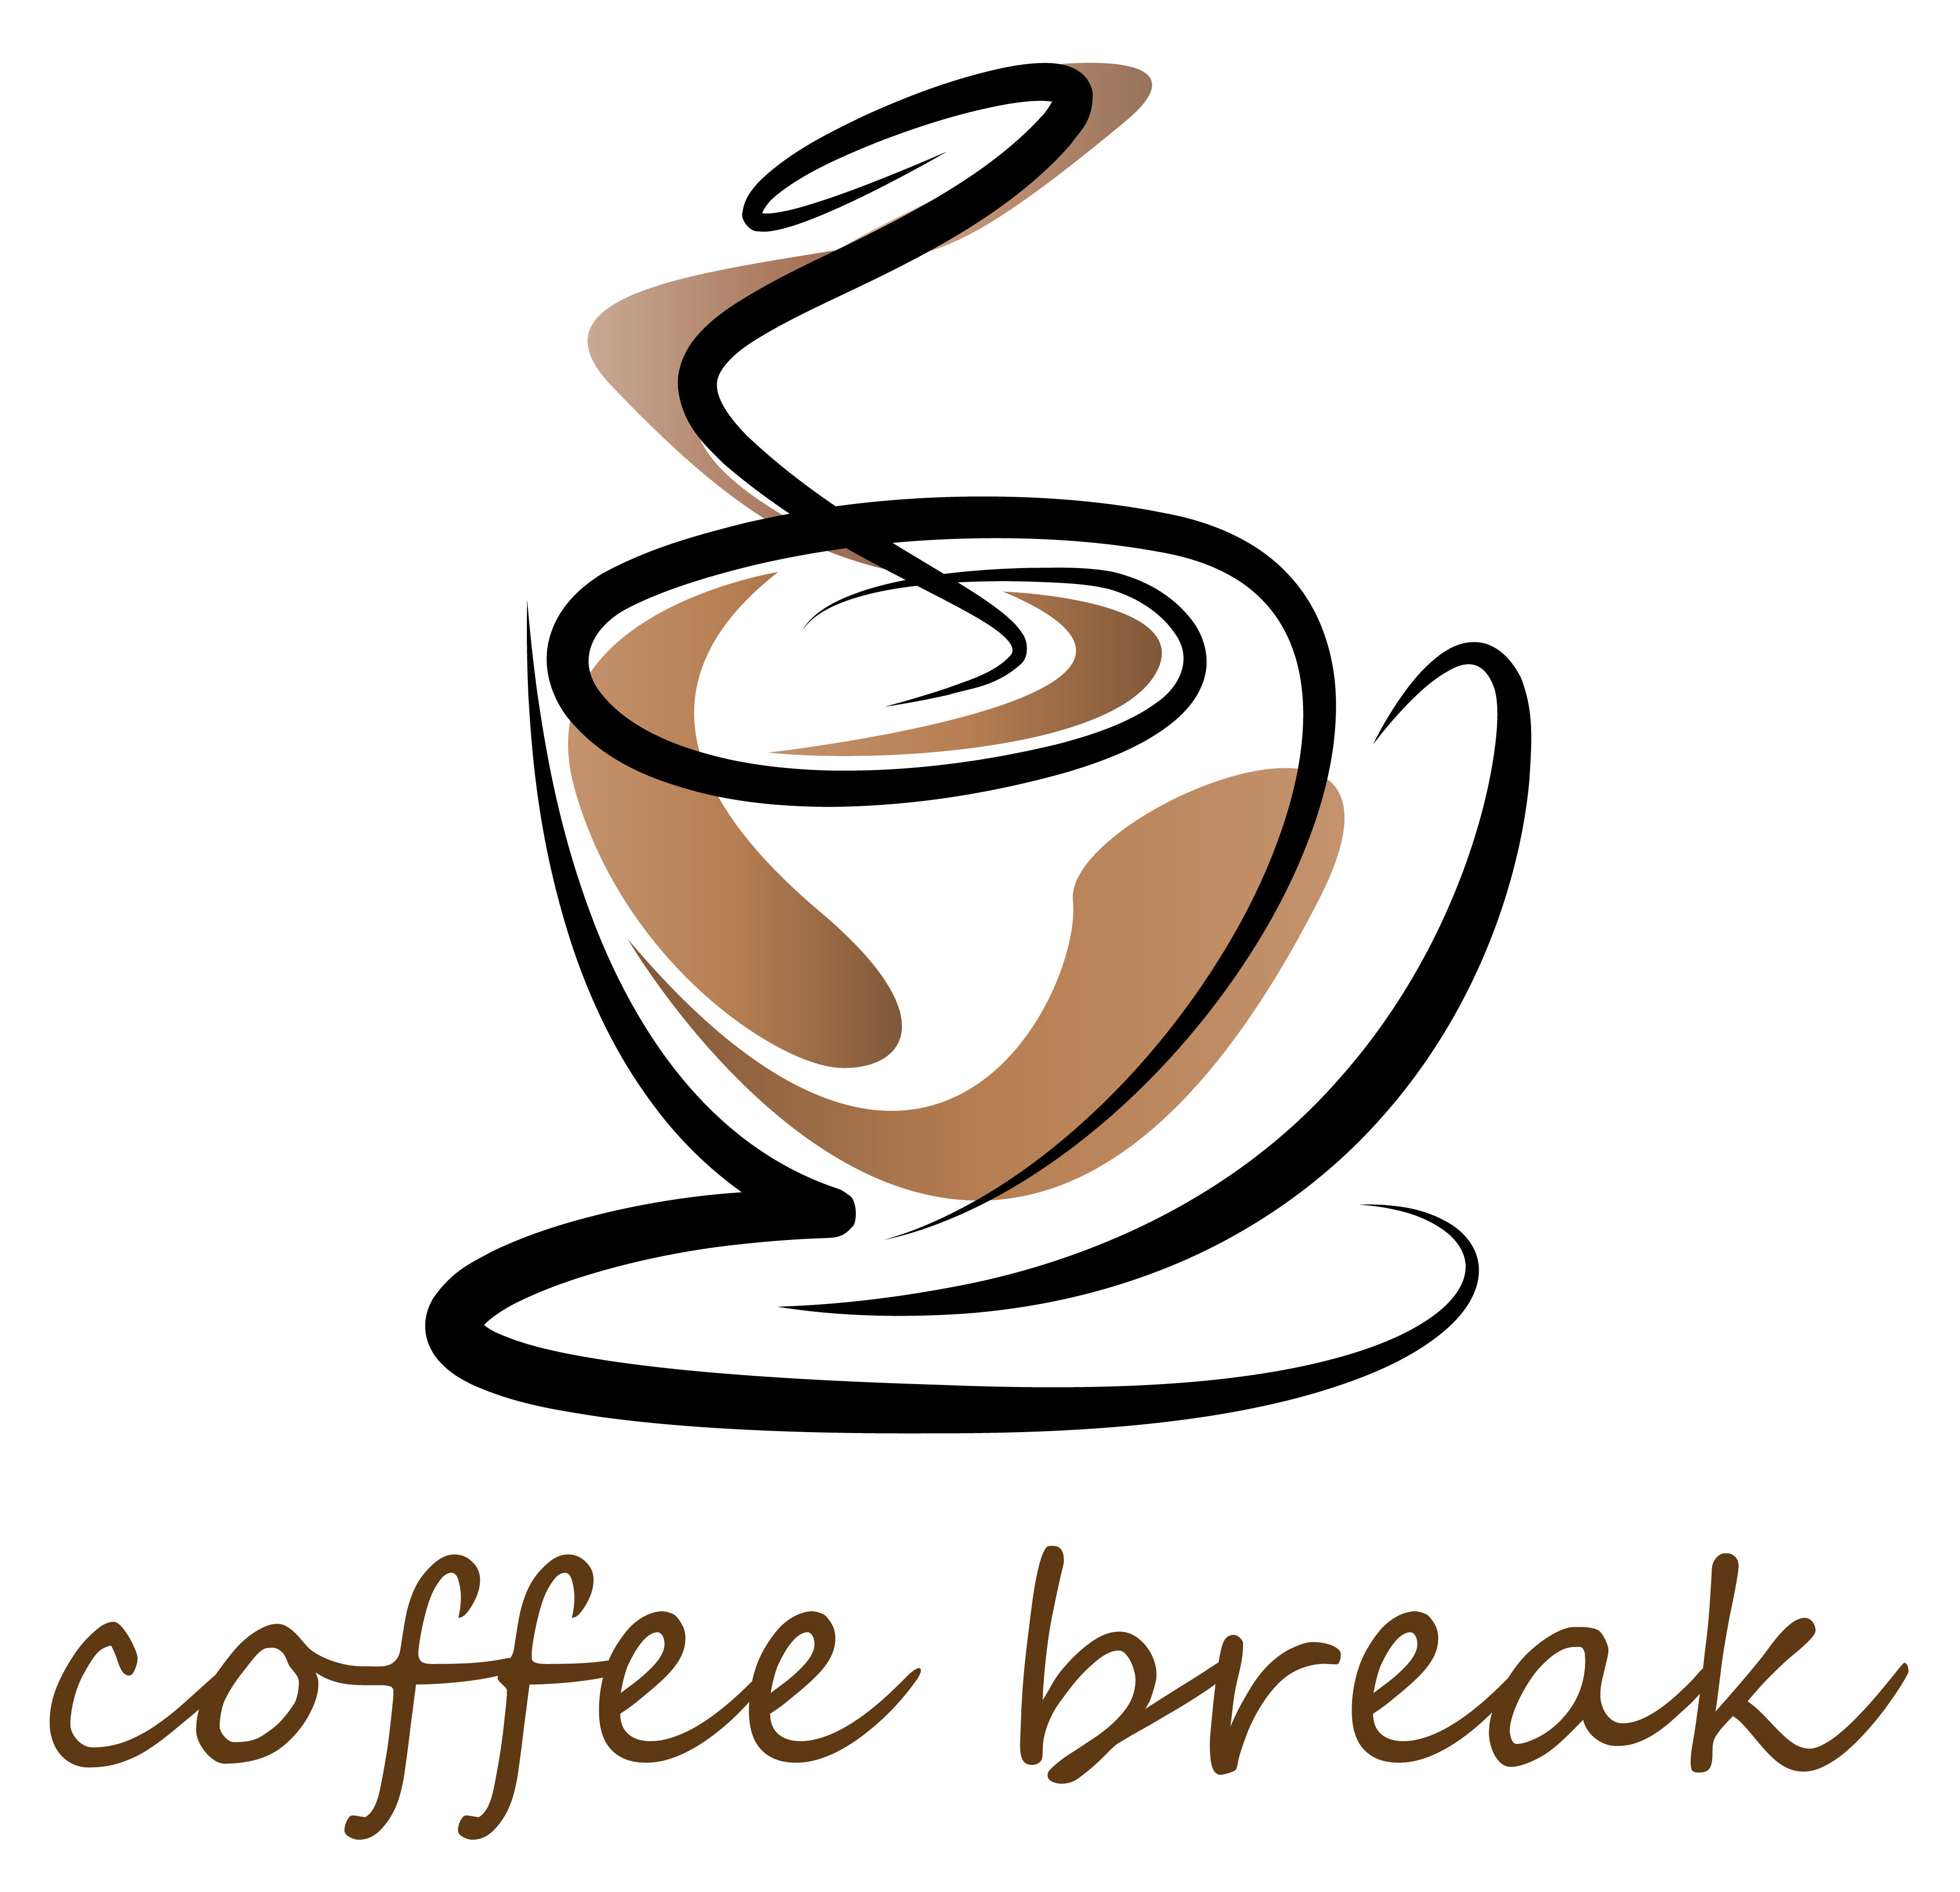 Break clipart coffee treat, Picture #124490 break clipart coffee treat